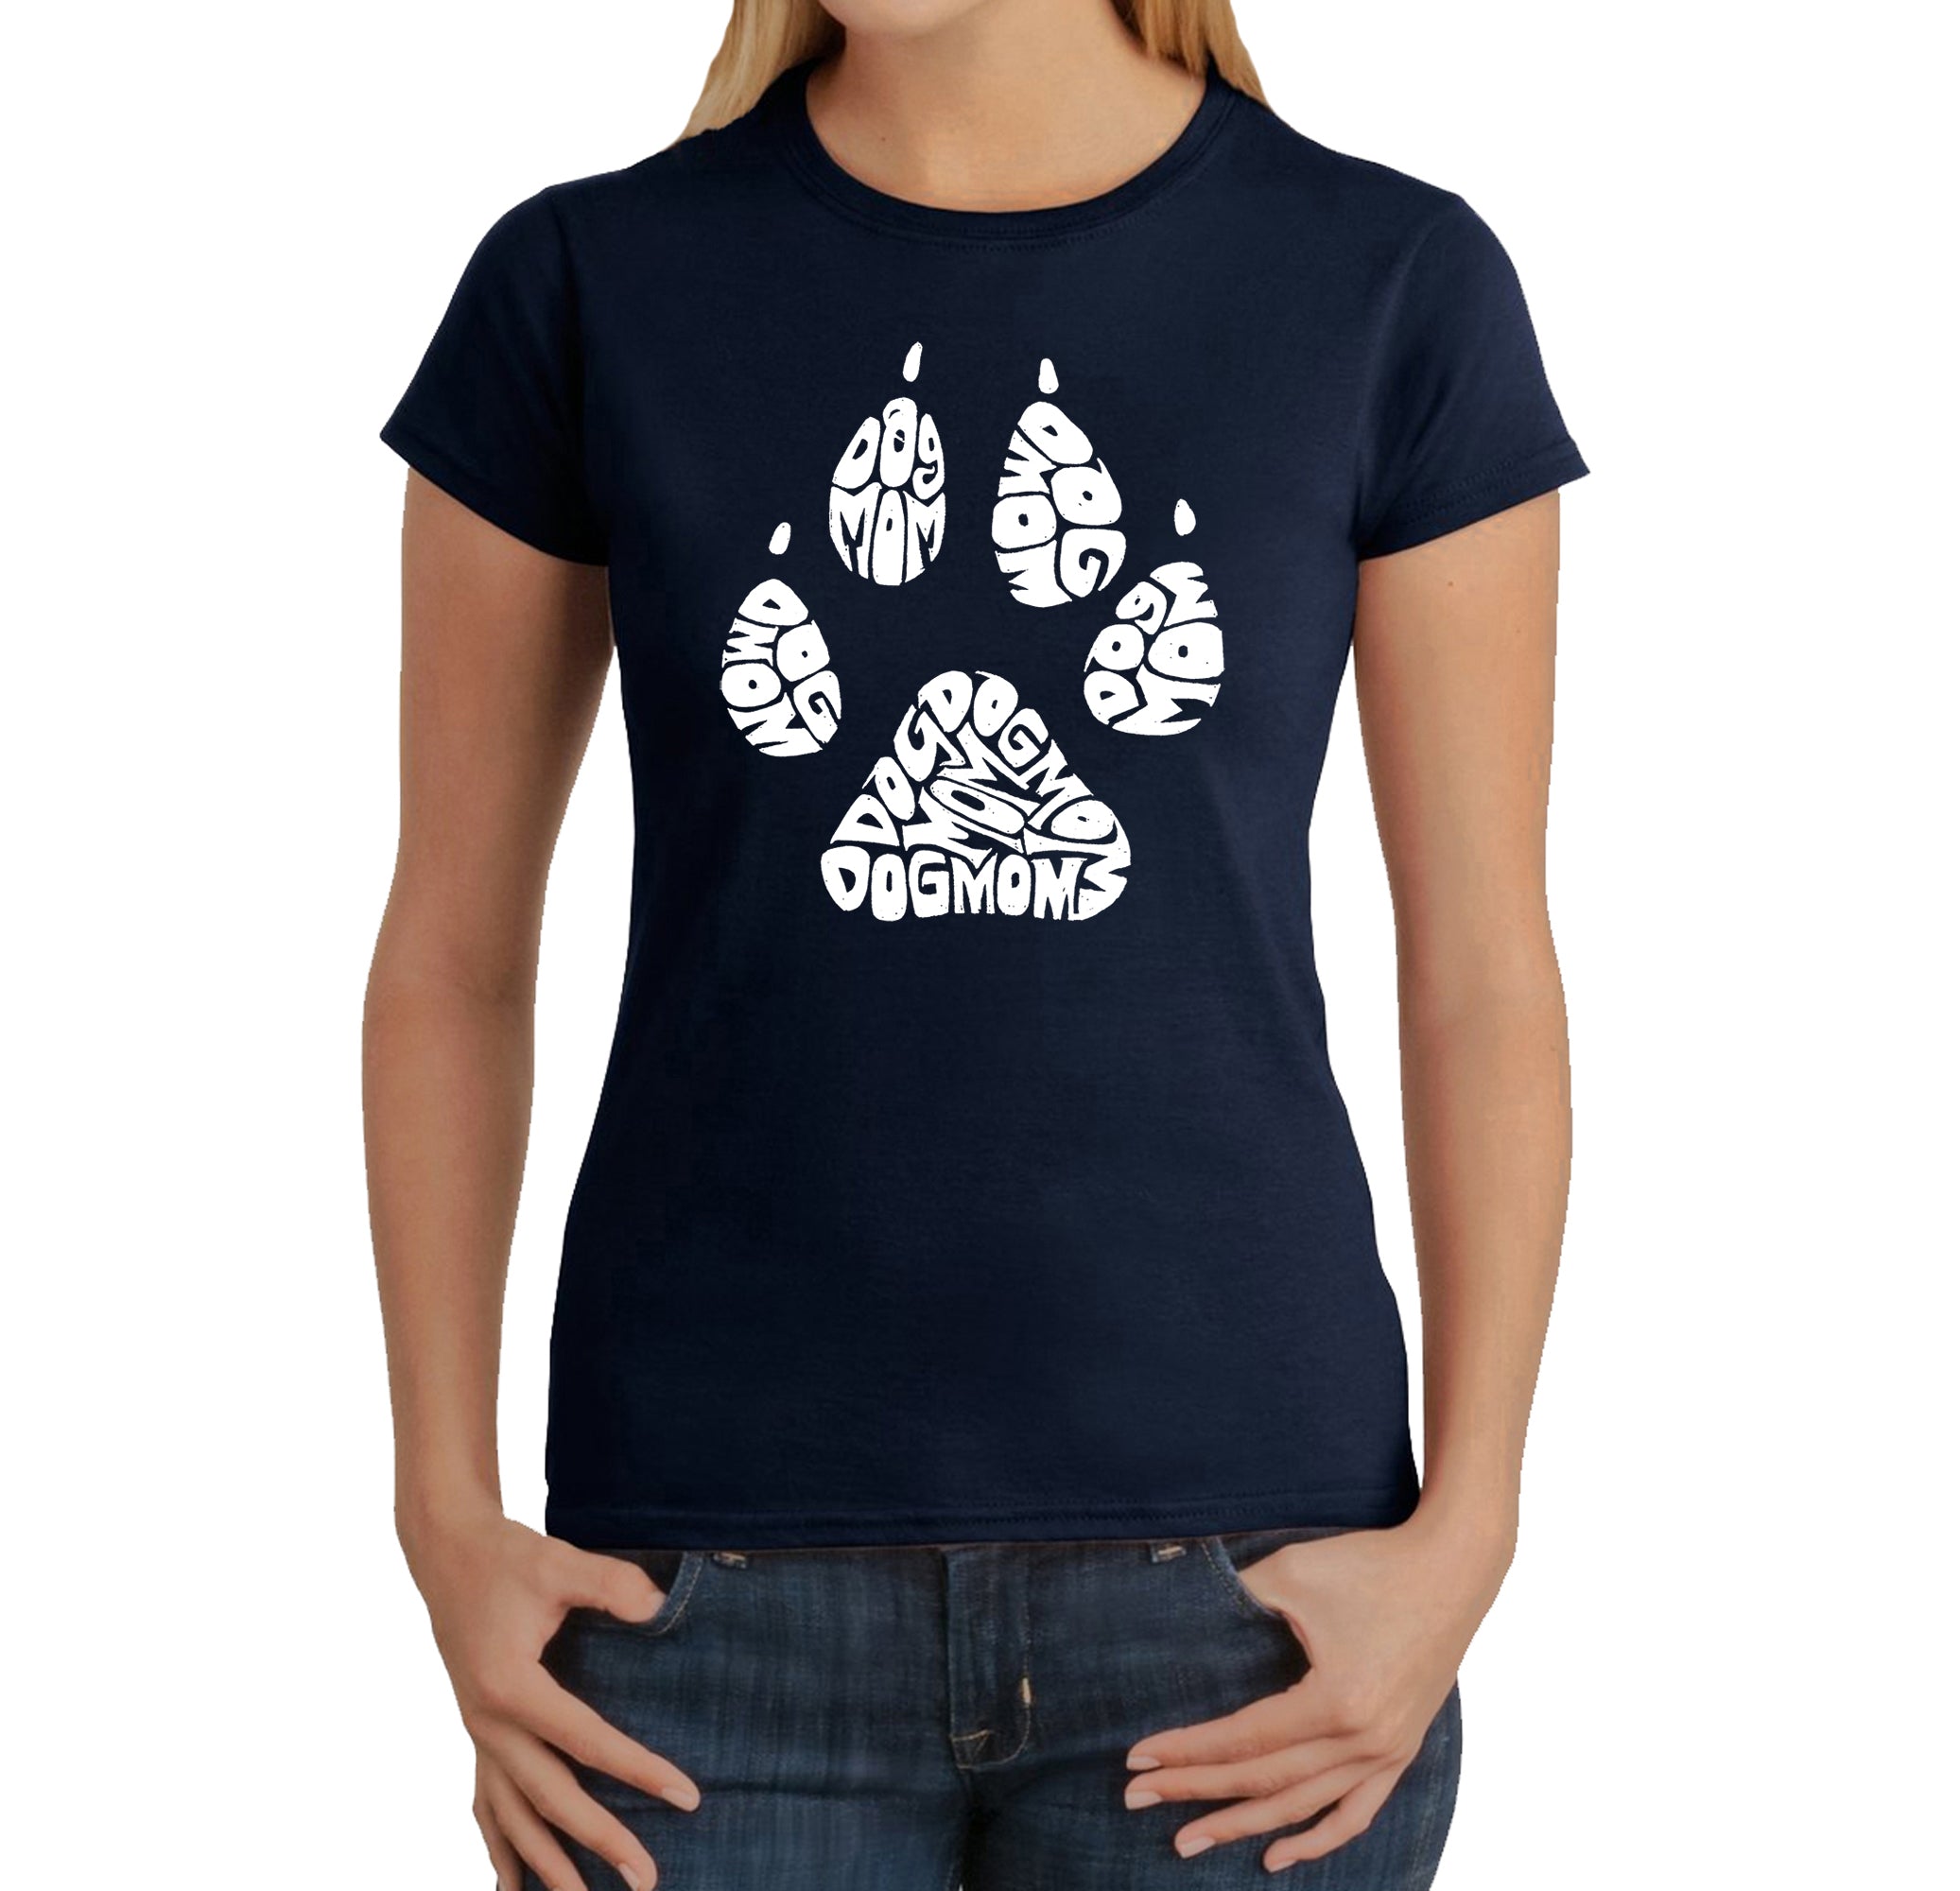 Dog Mom - Women's Word Art T-Shirt - Navy - Small